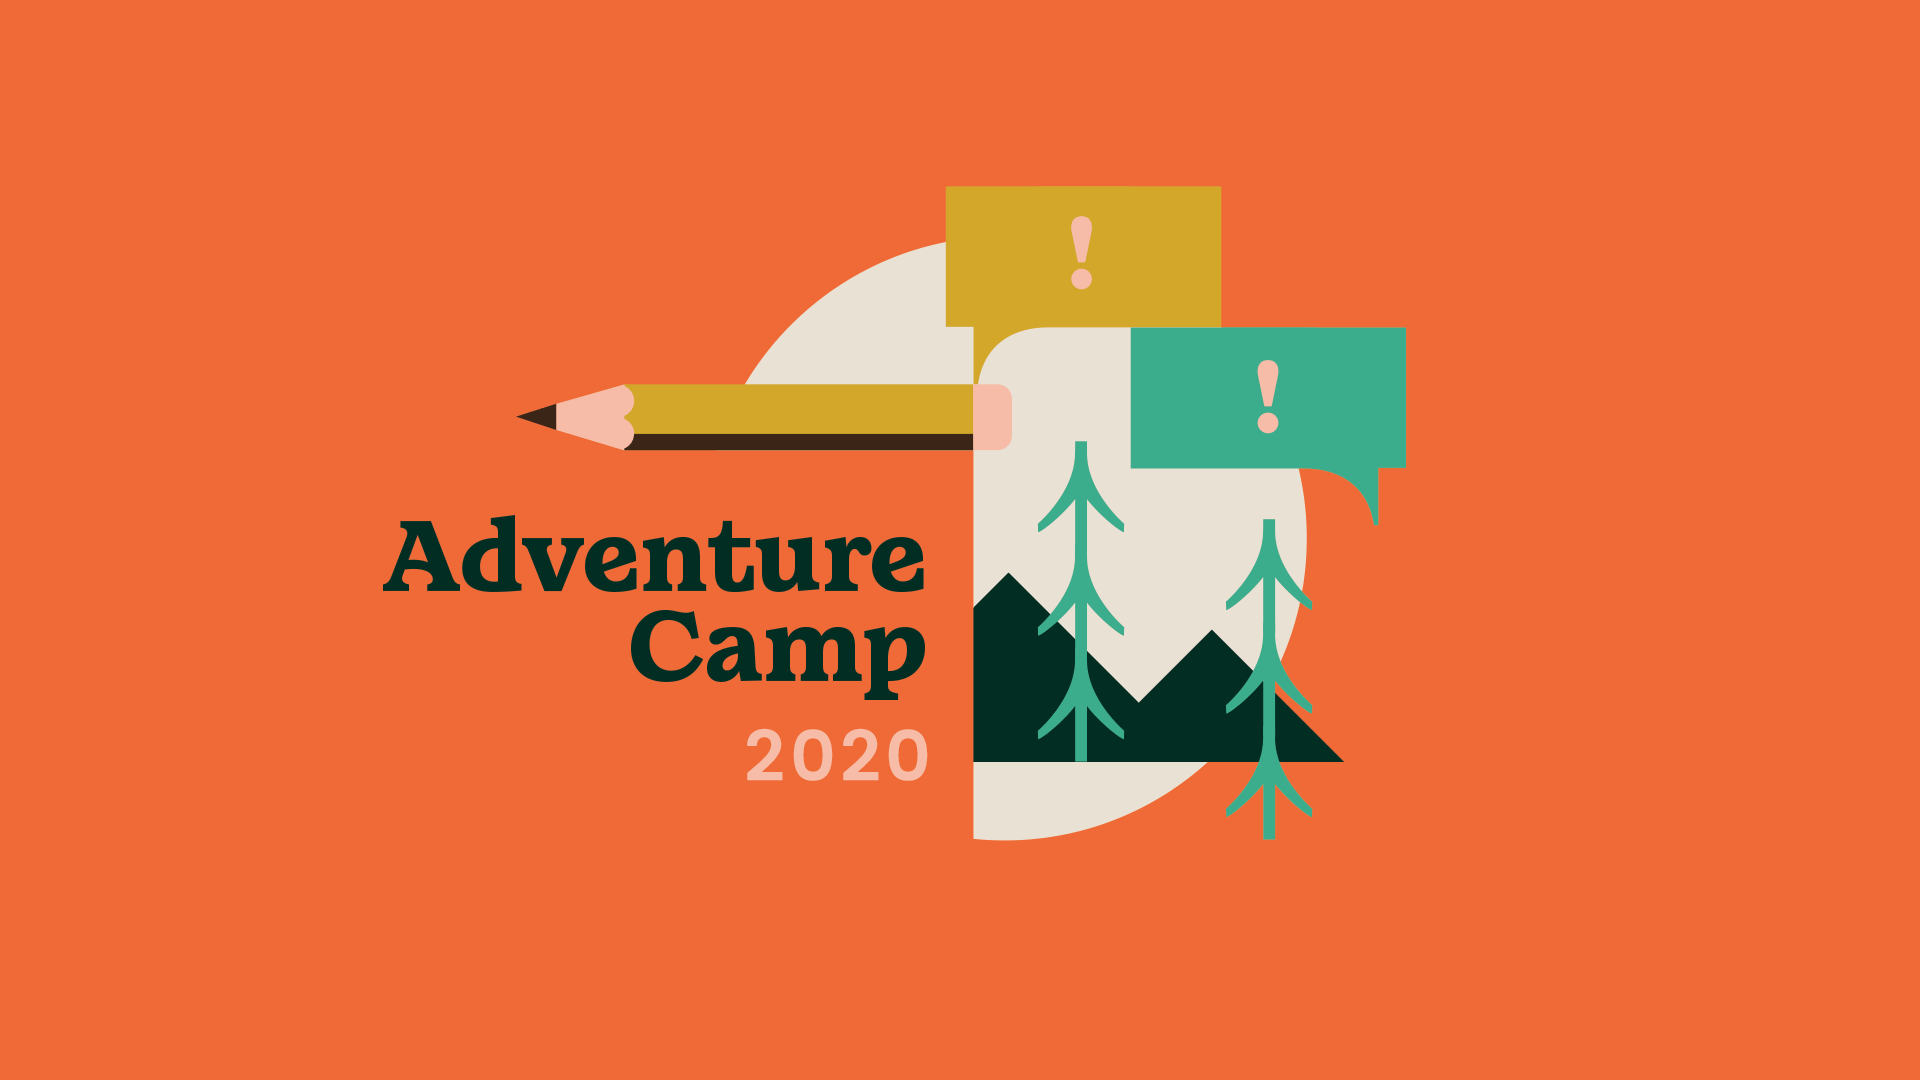 Image of Kind Habits' Adventure Camp illustration.